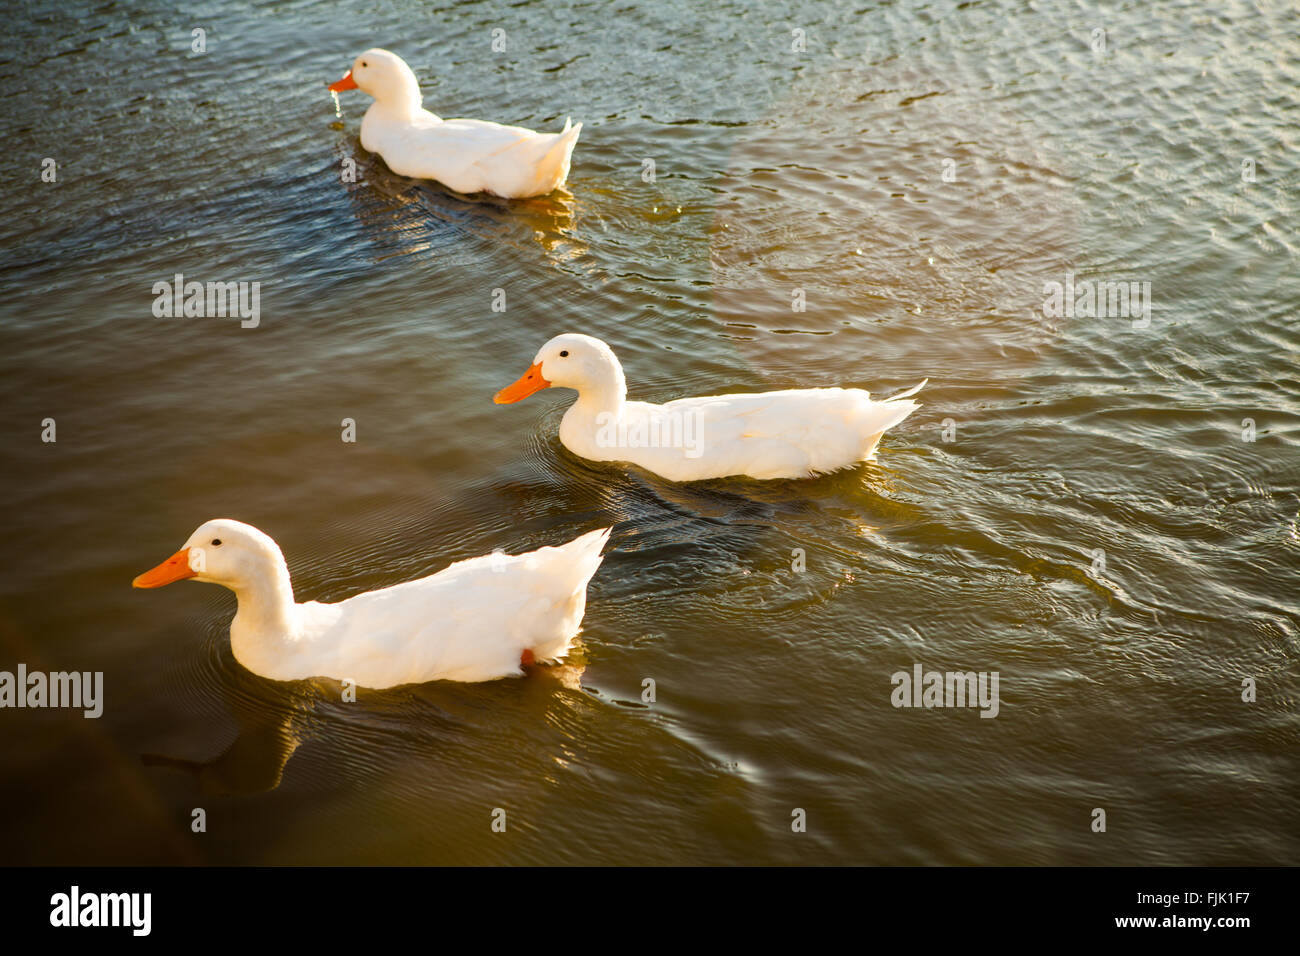 Three ducks swimming in a pond Stock Photo